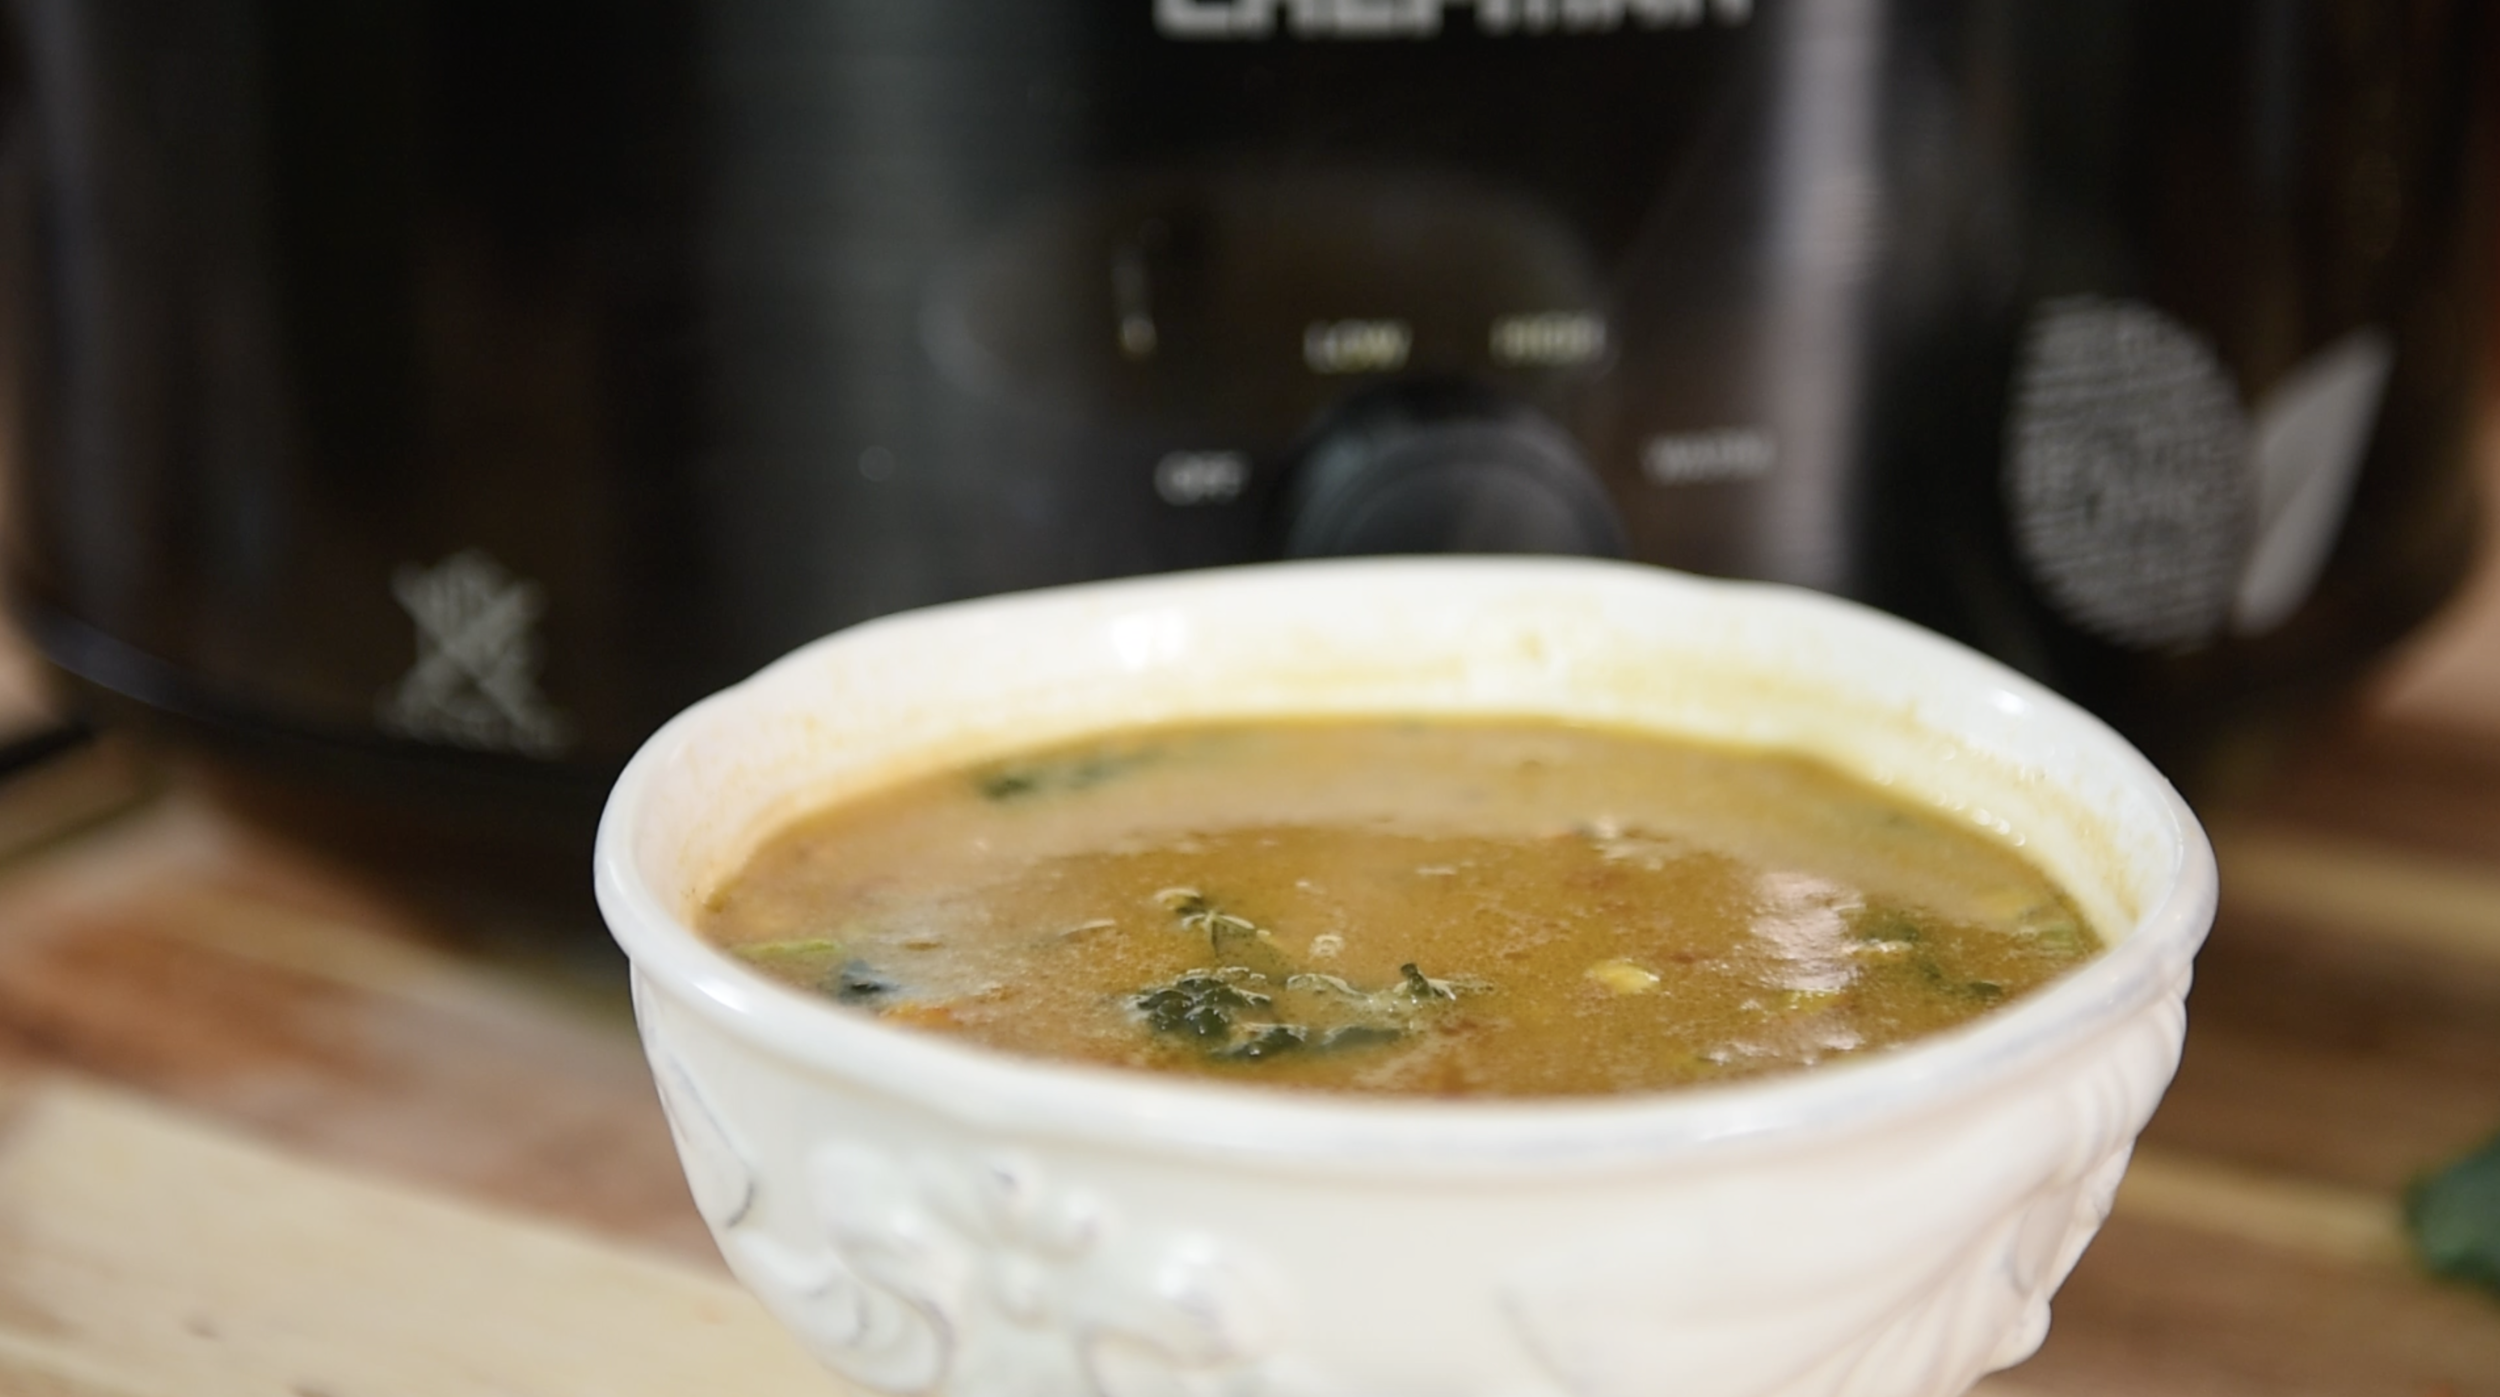 Krewella's Healing Soup